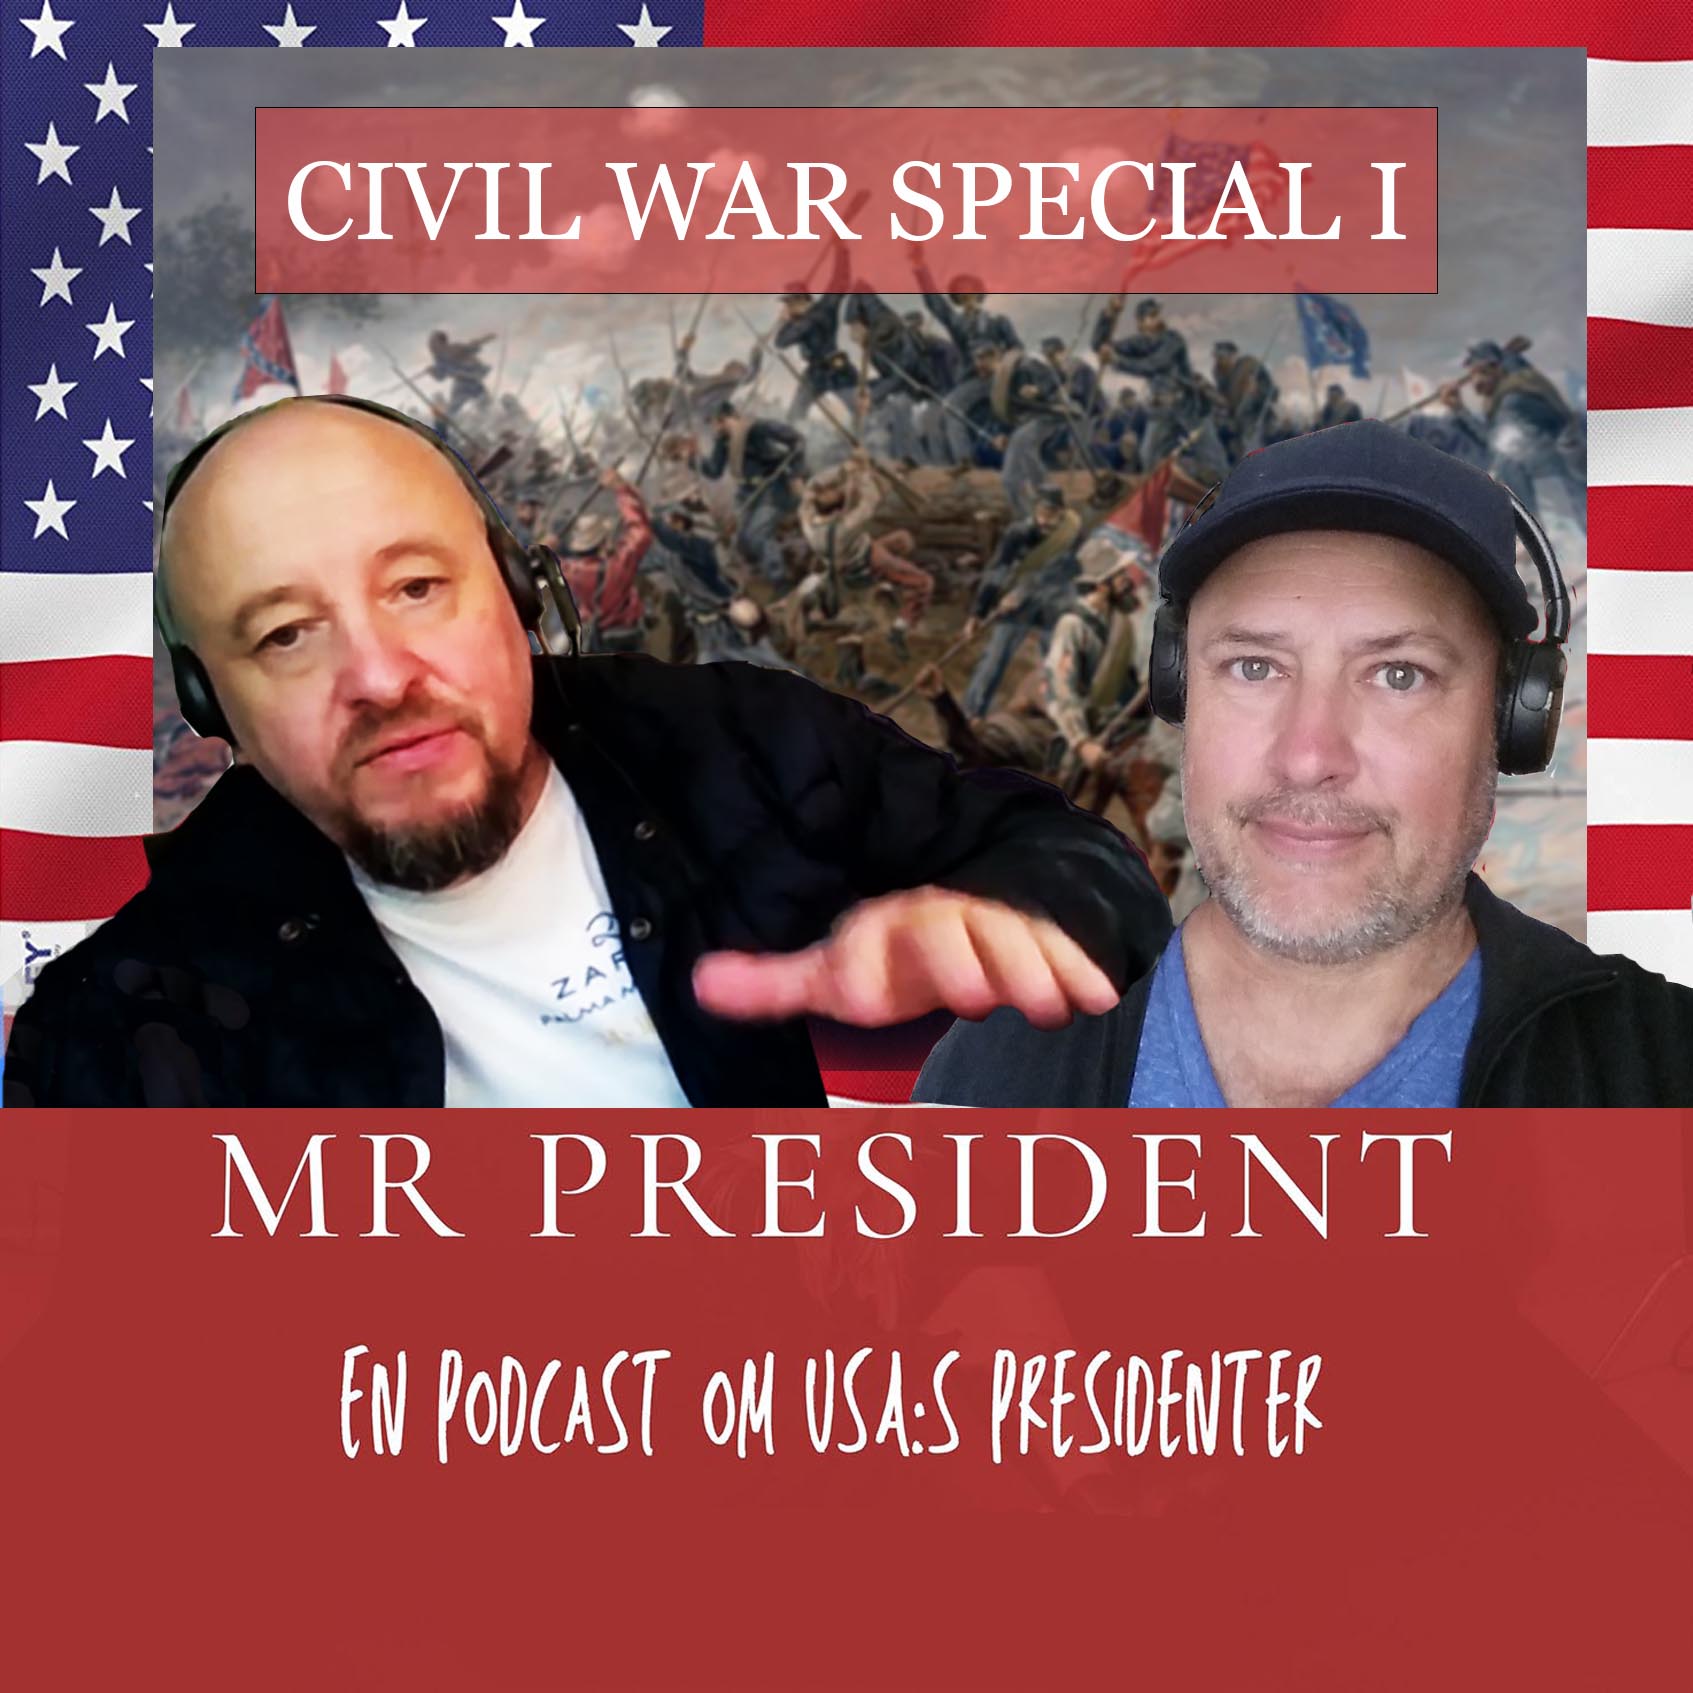 Mr President del 14: Civil War special I